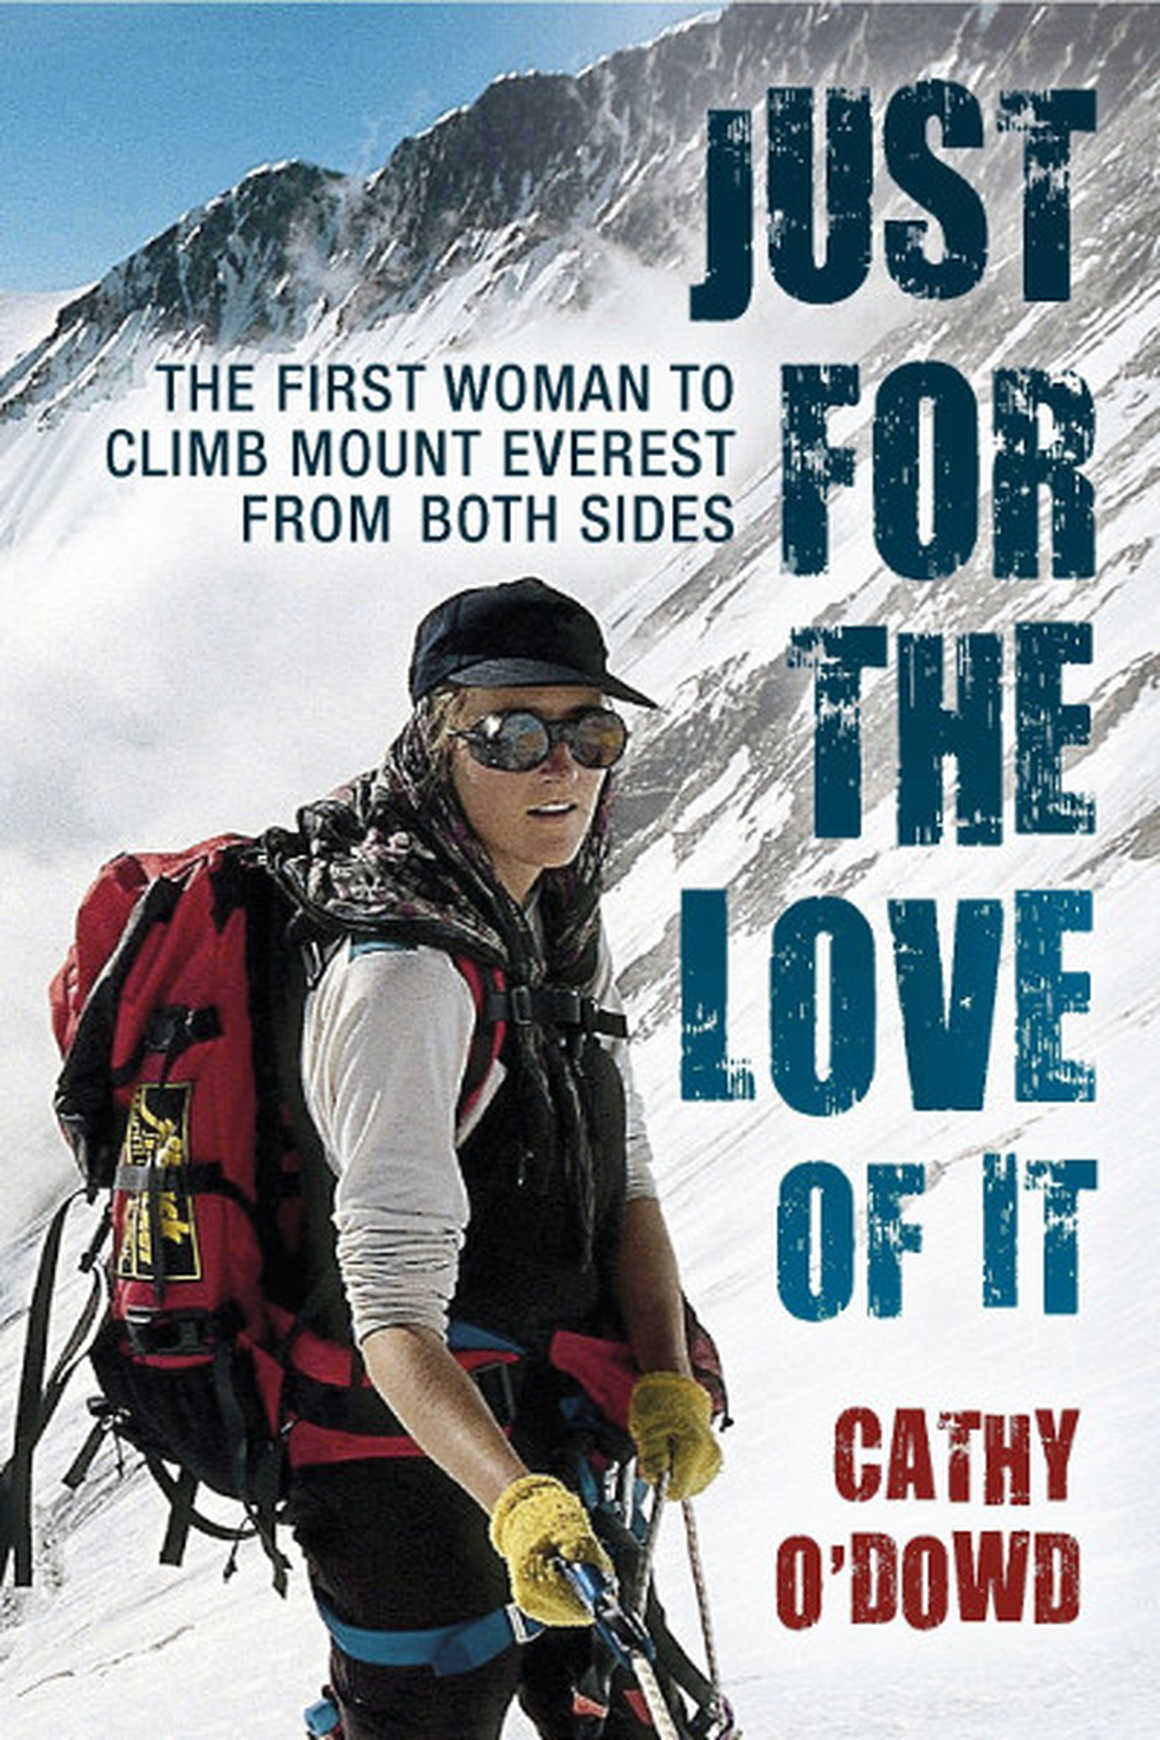 Cathy O Dowd climbs Kilimanjaro